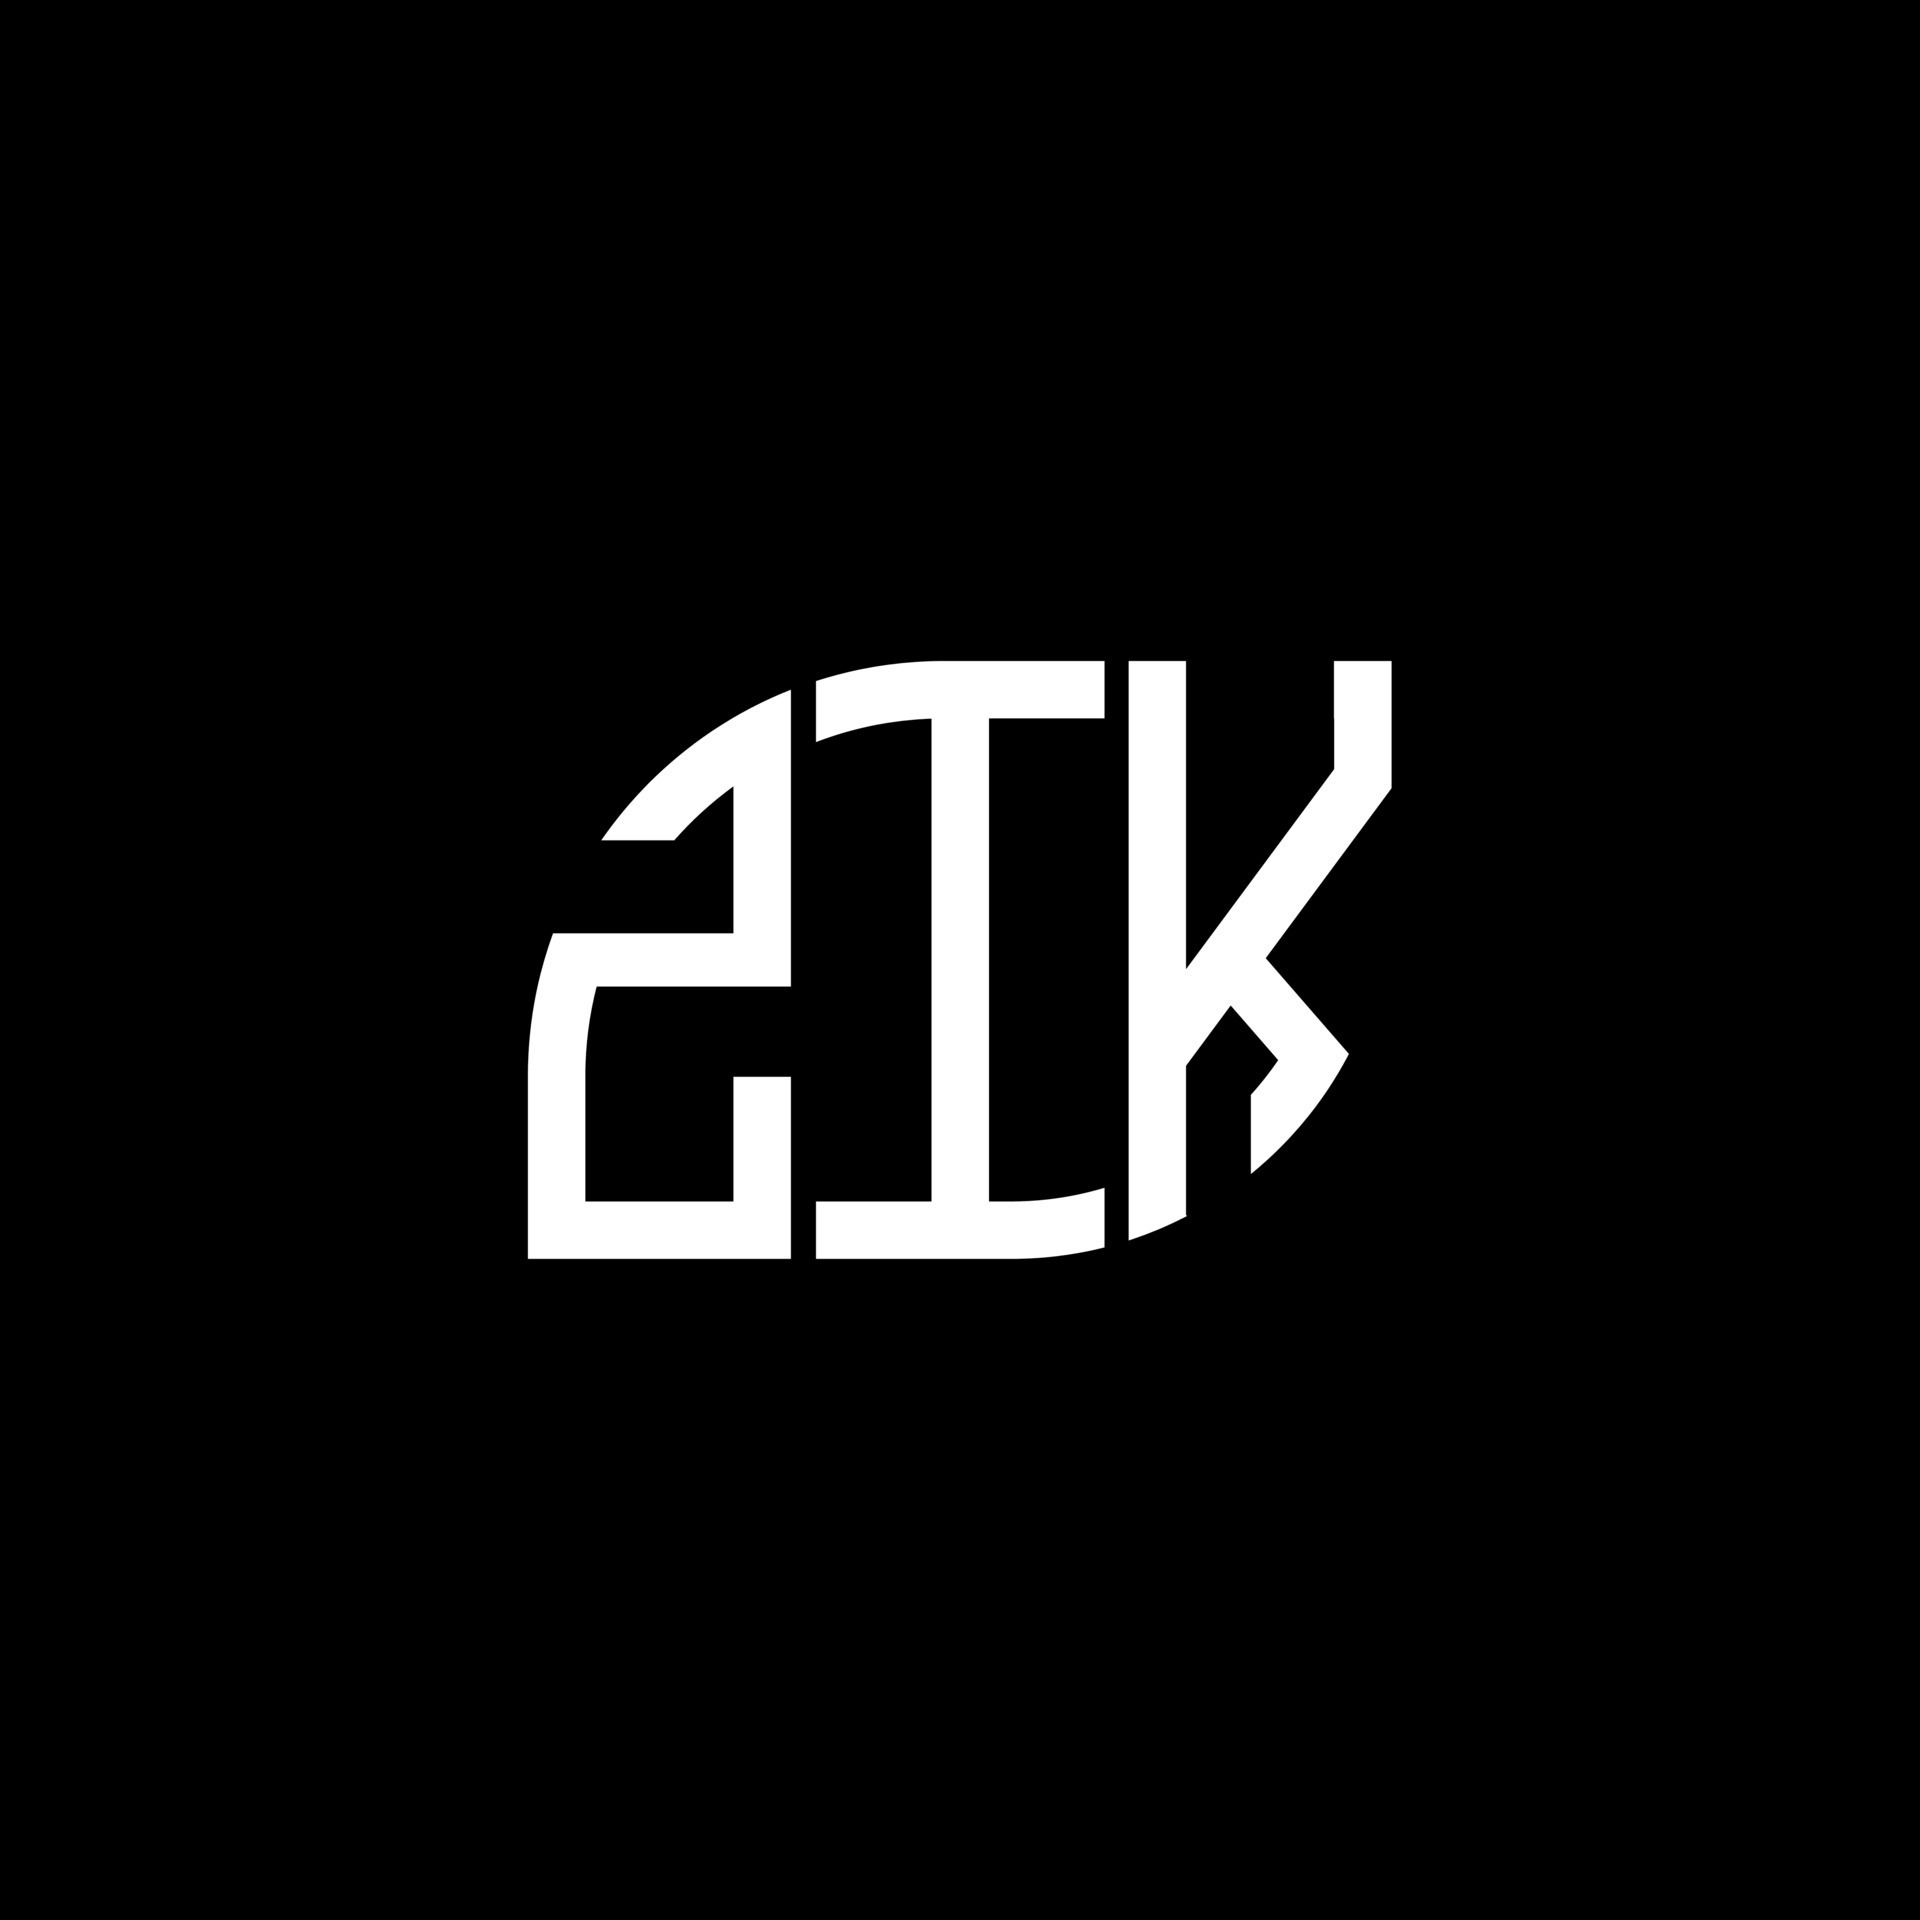 ZIK letter logo design on black background. ZIK creative initials ...